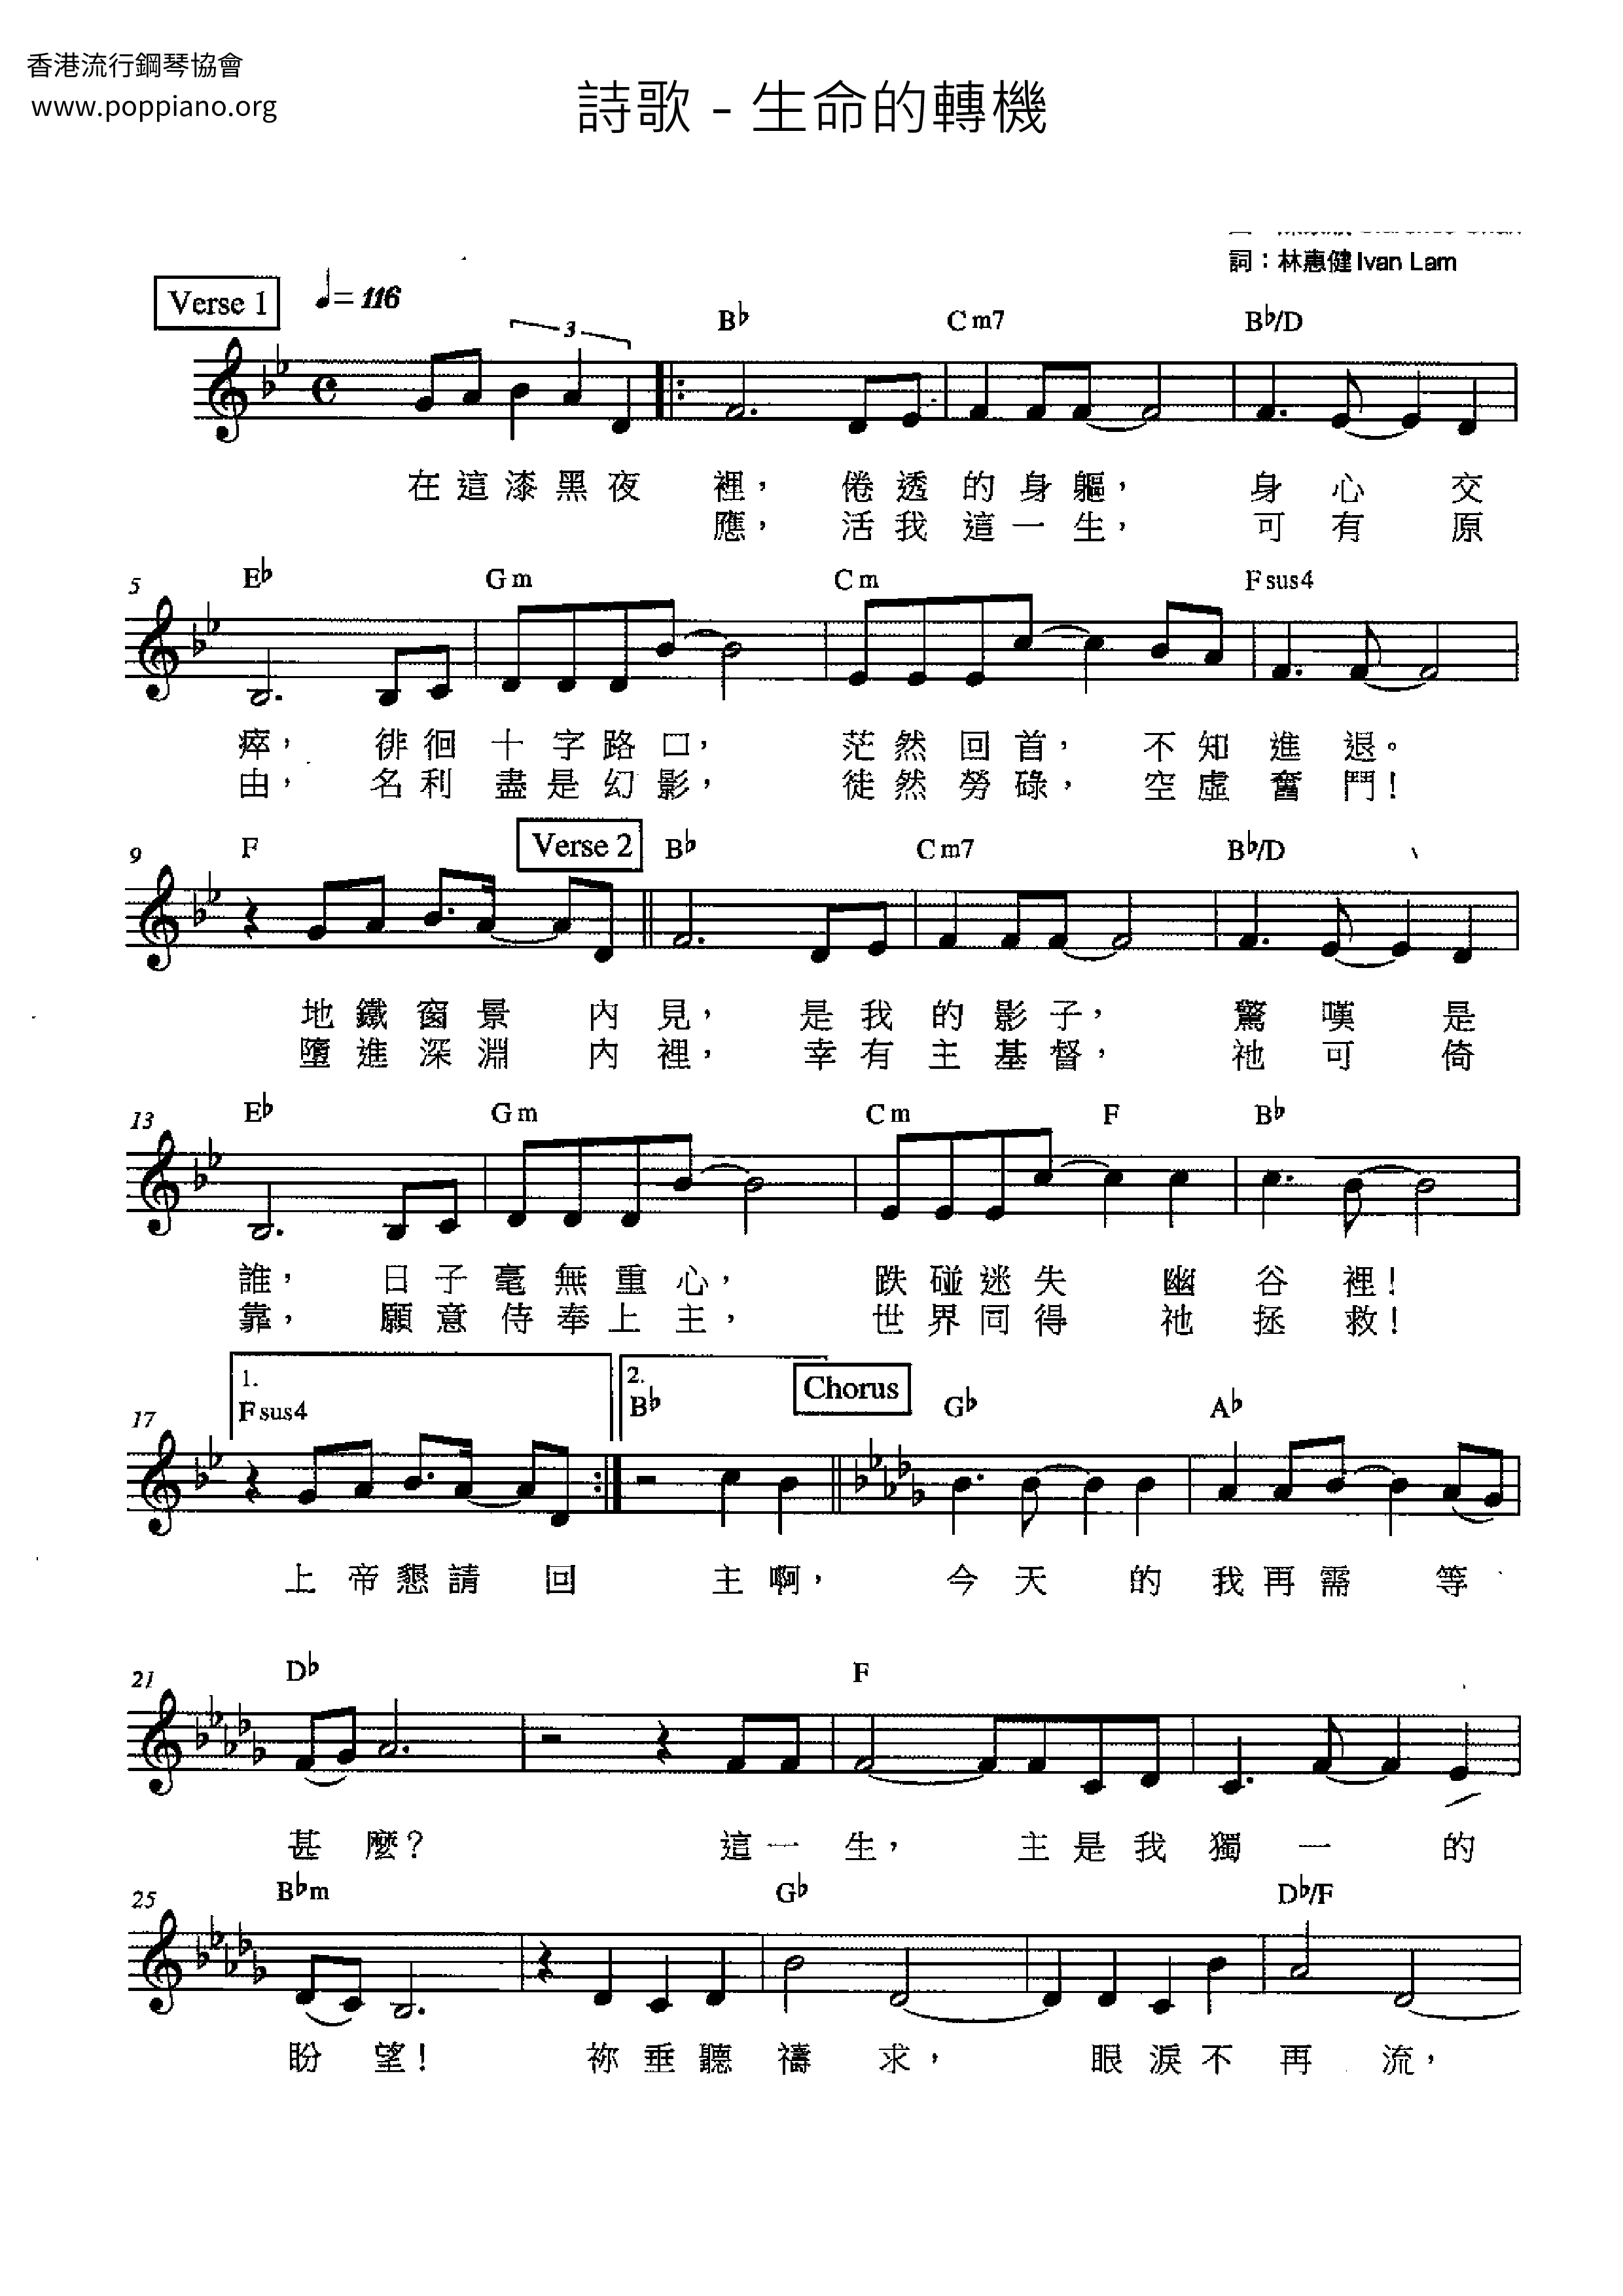 Hymn The Turning Point Of Life Sheet Music Pdf Free Score Download